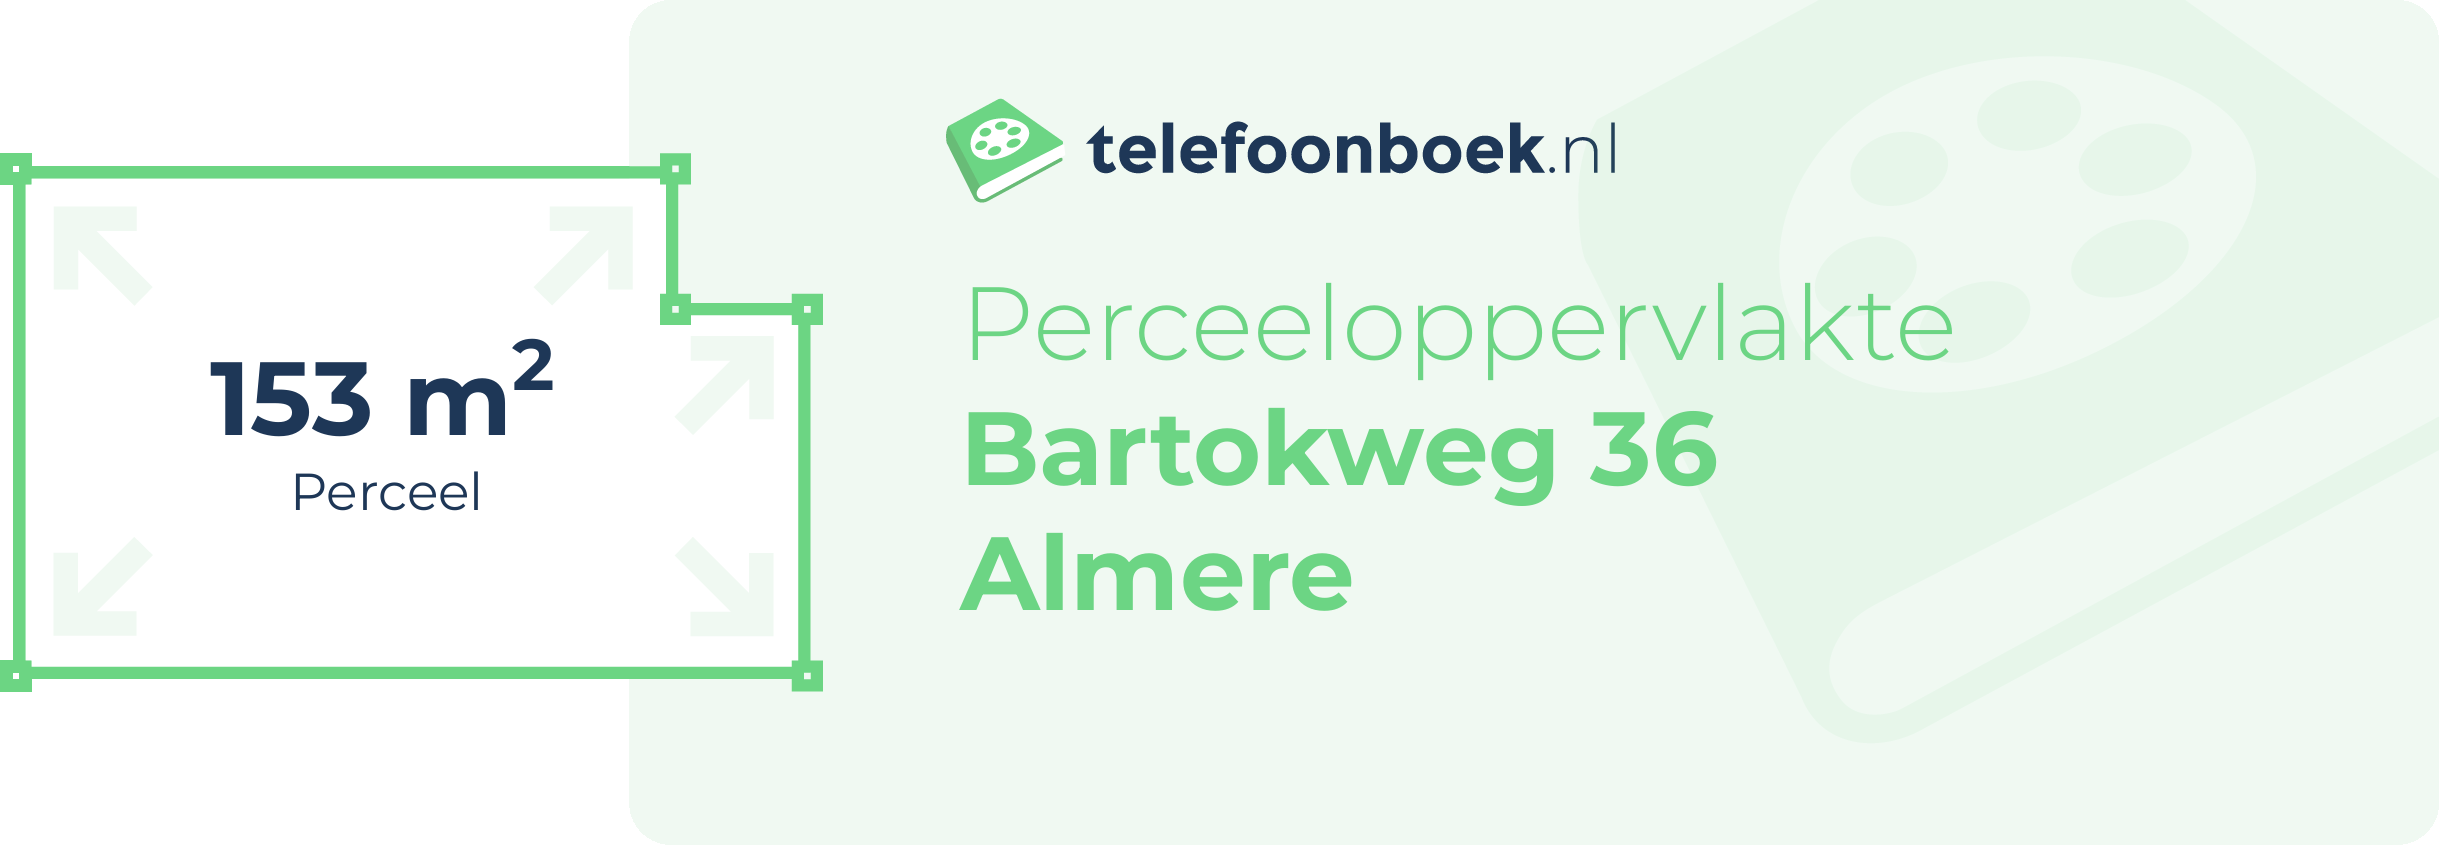 Perceeloppervlakte Bartokweg 36 Almere